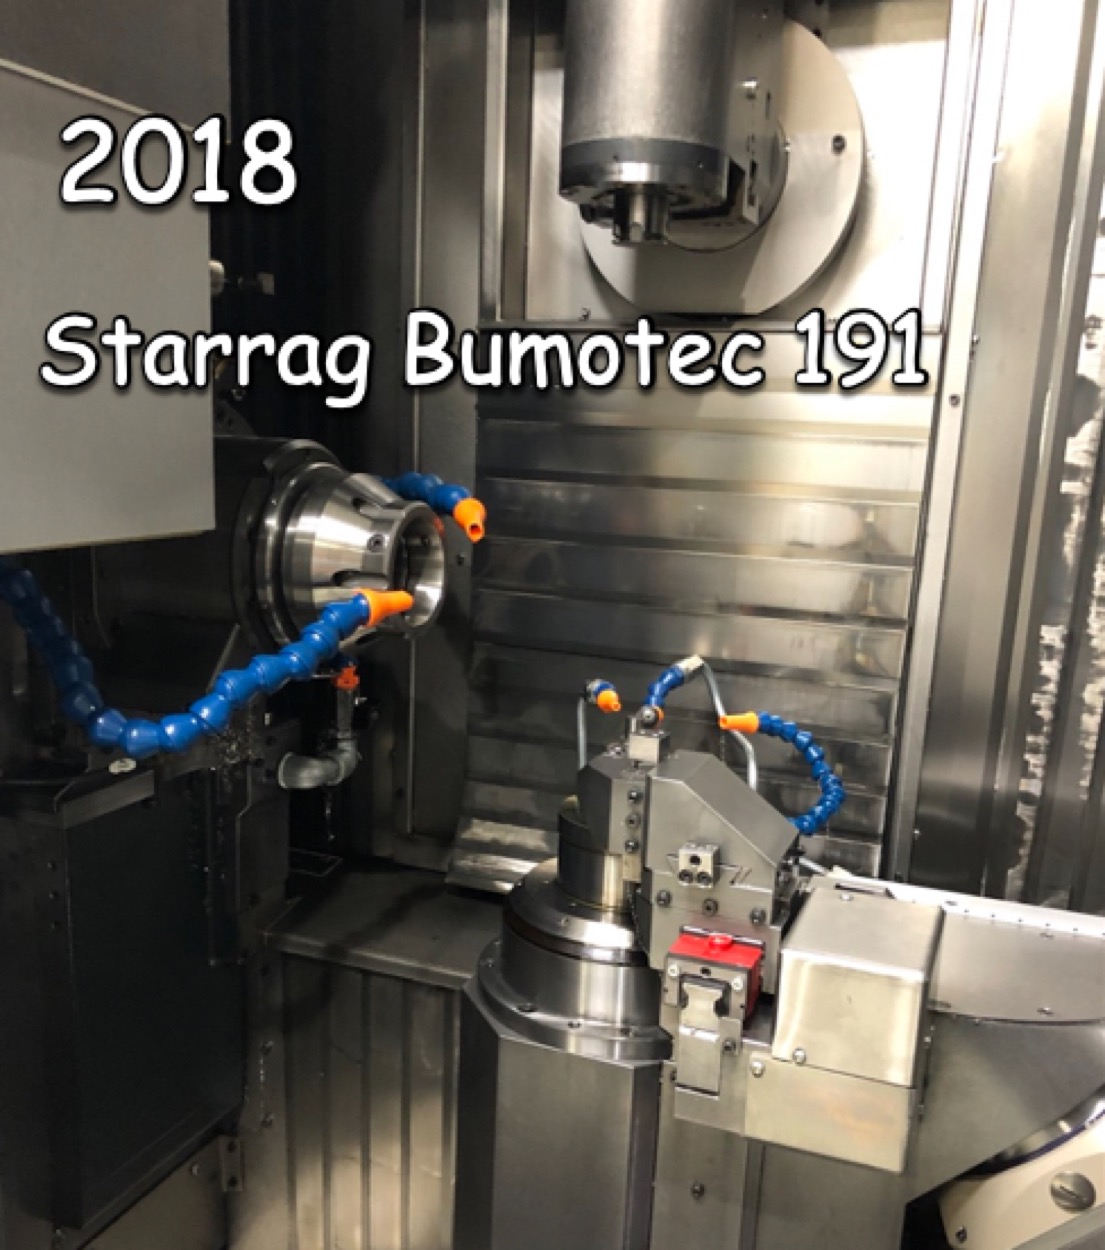  Starrag Bumotec S191RP Lathe - CNC  2018